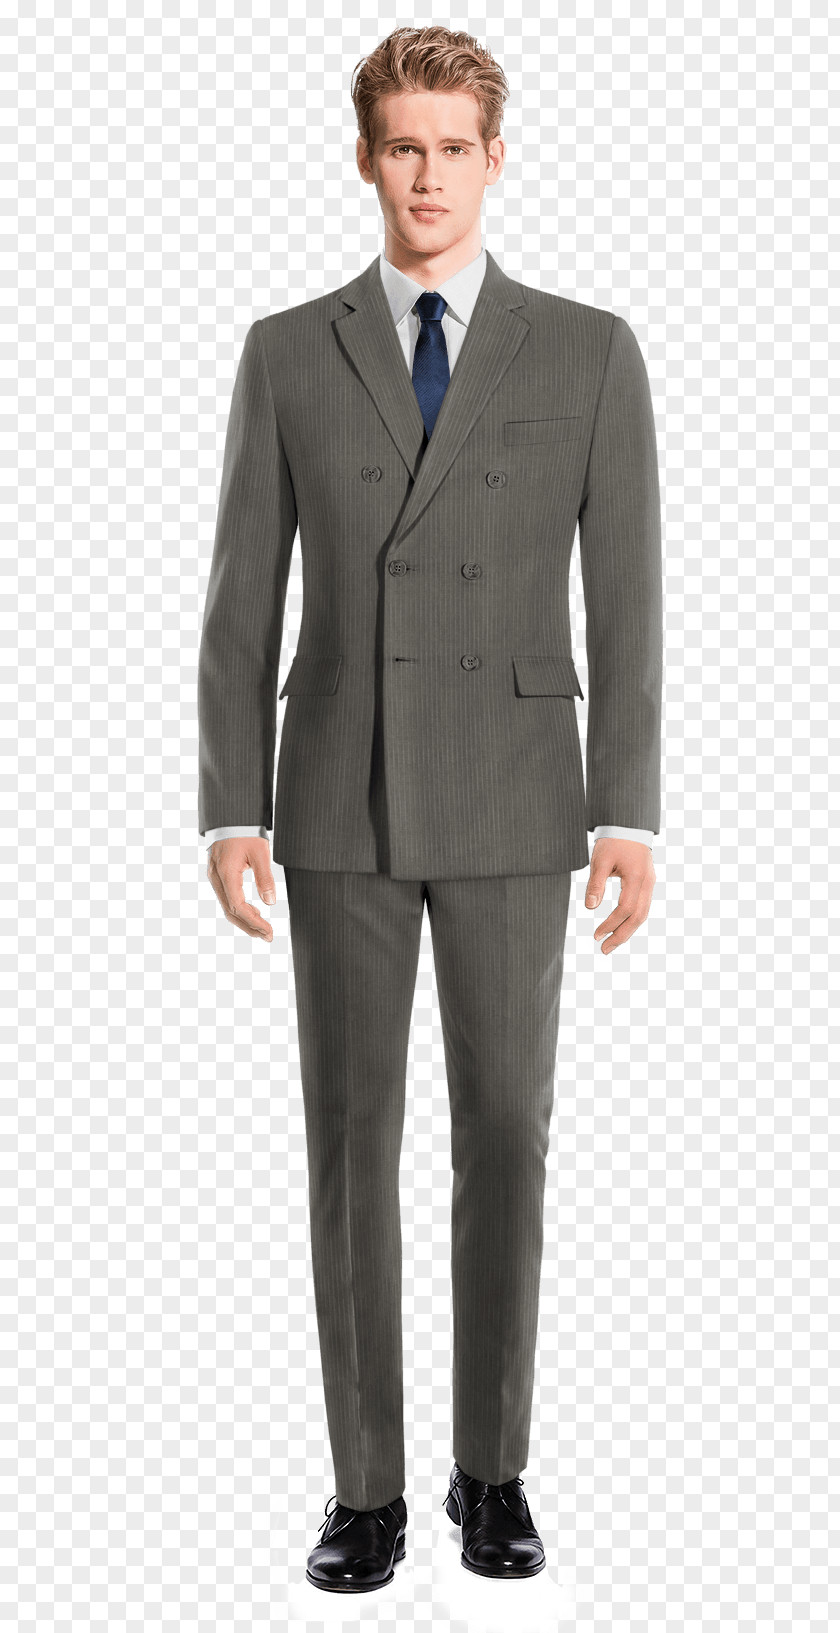 Suit Tuxedo Double-breasted Tweed Black Tie PNG